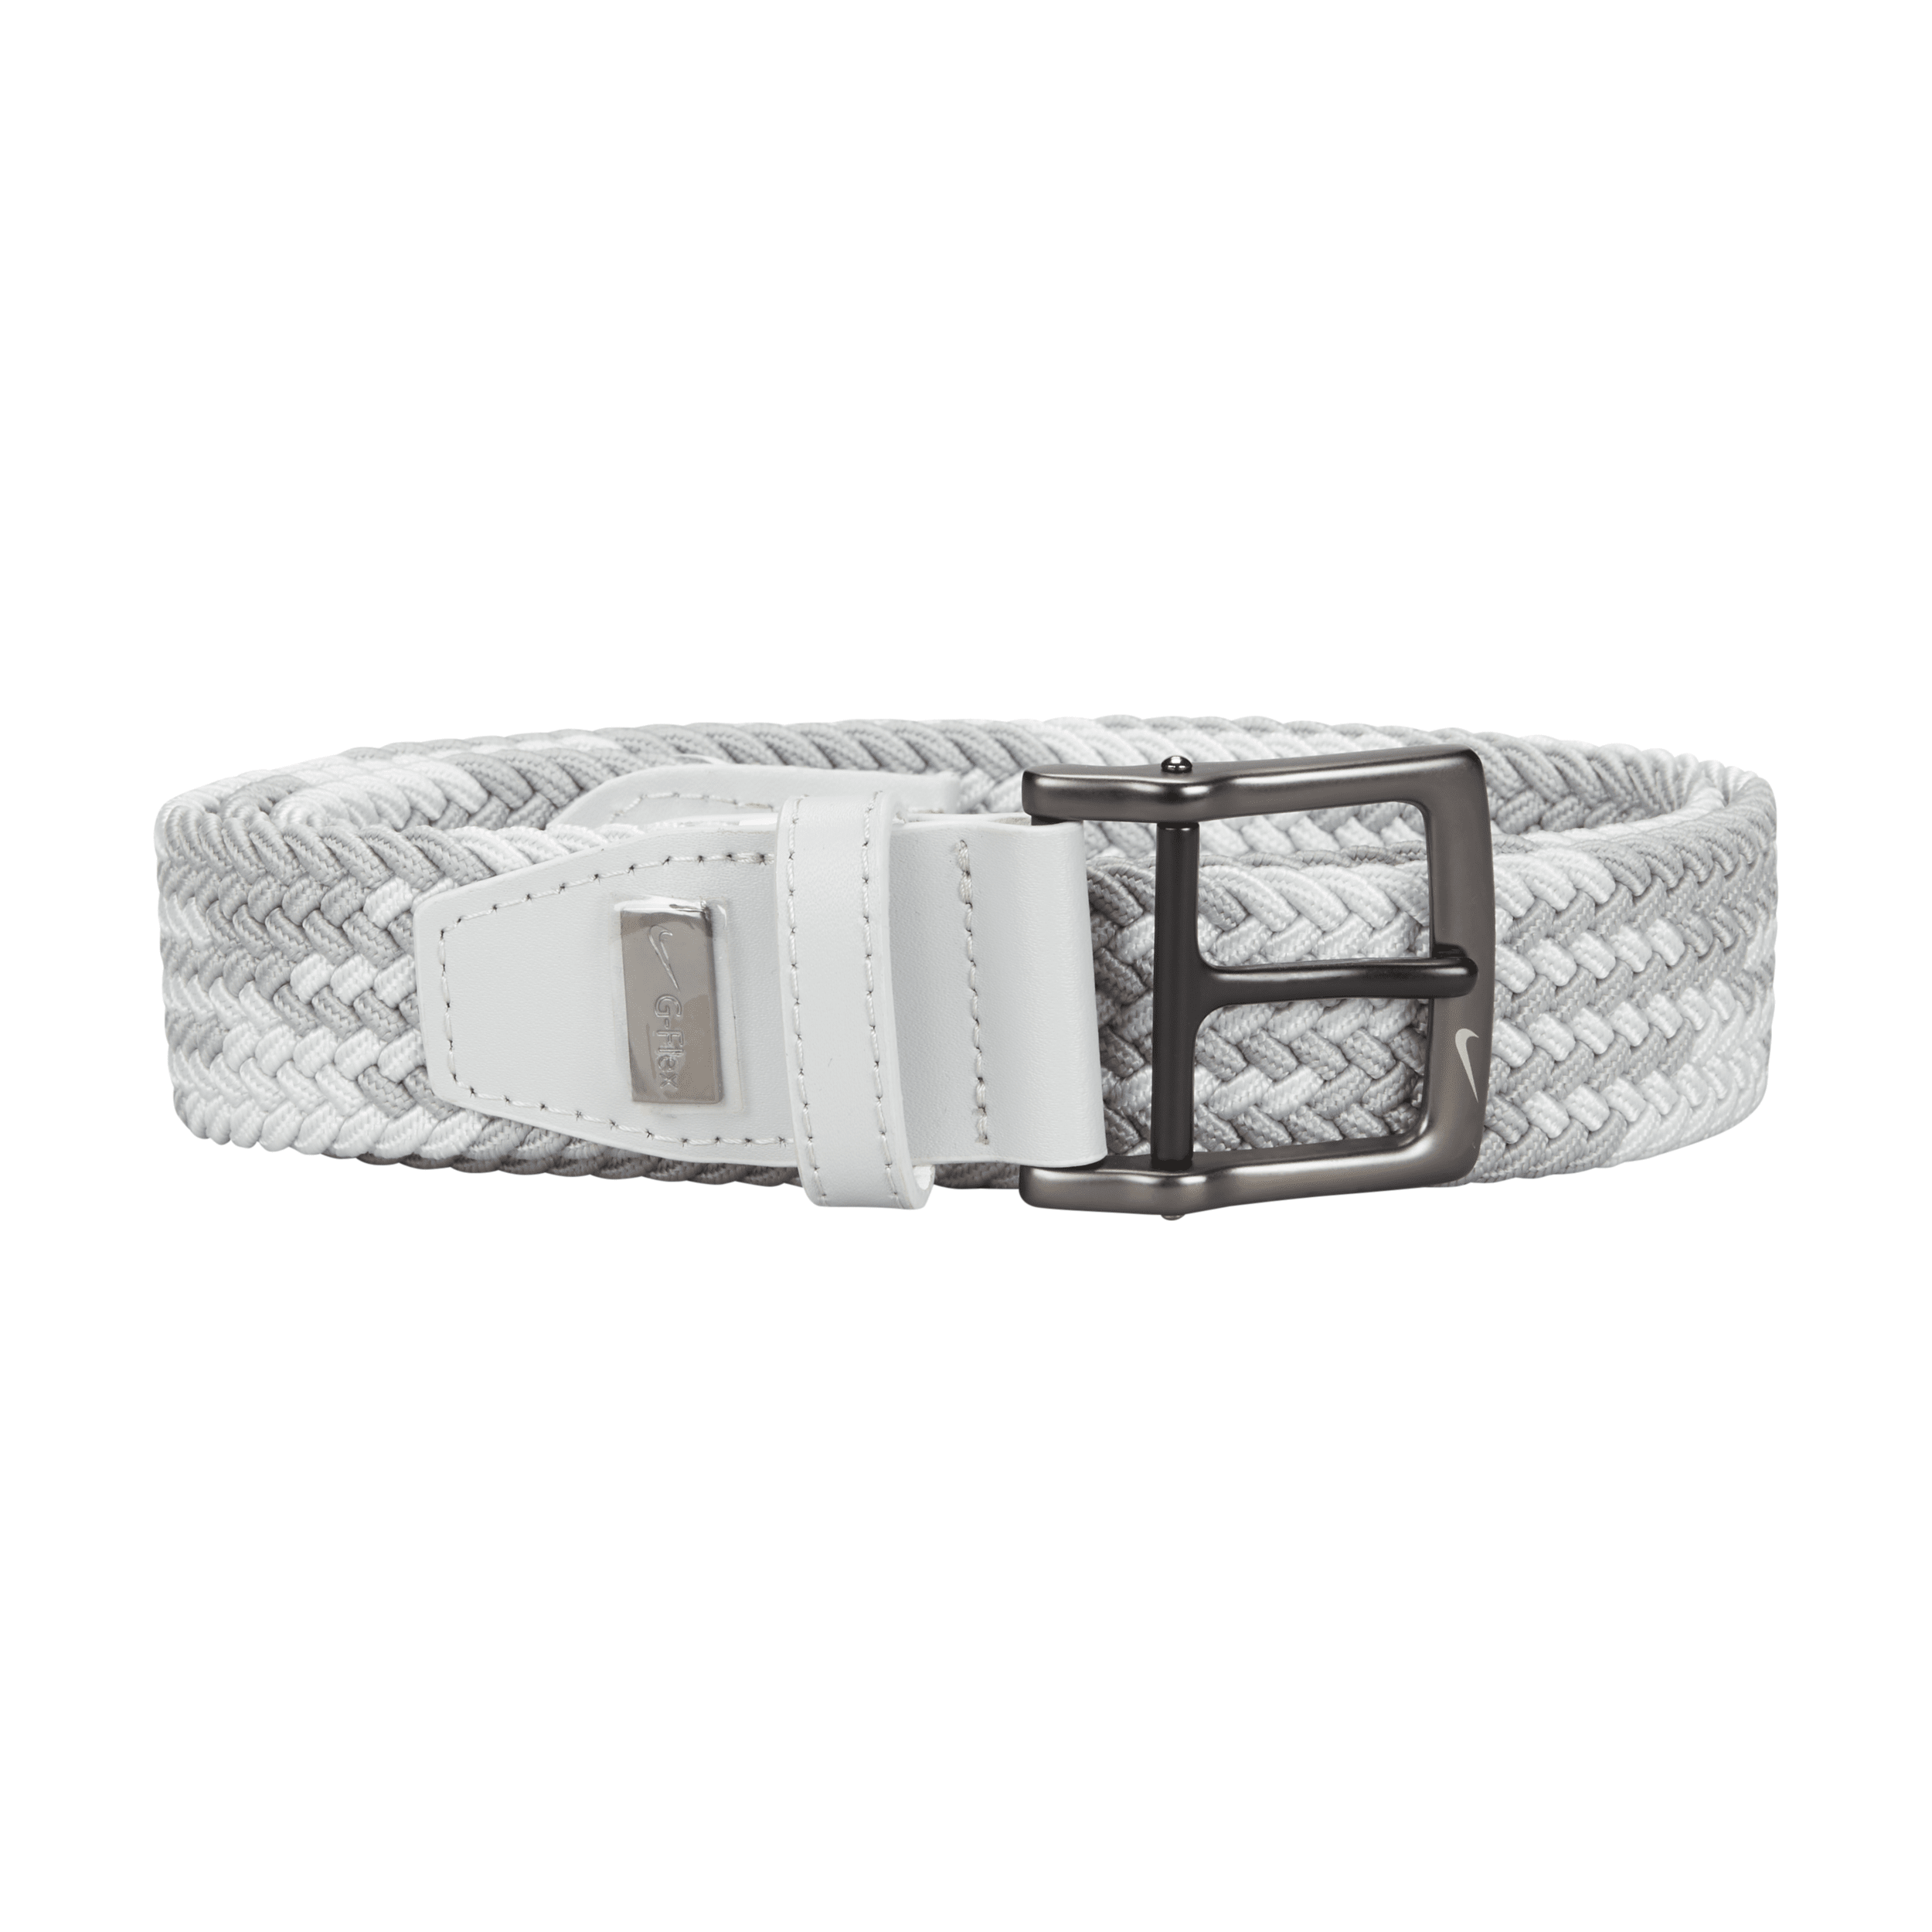 Nike Men's G-flex Stretch Woven Belt In White